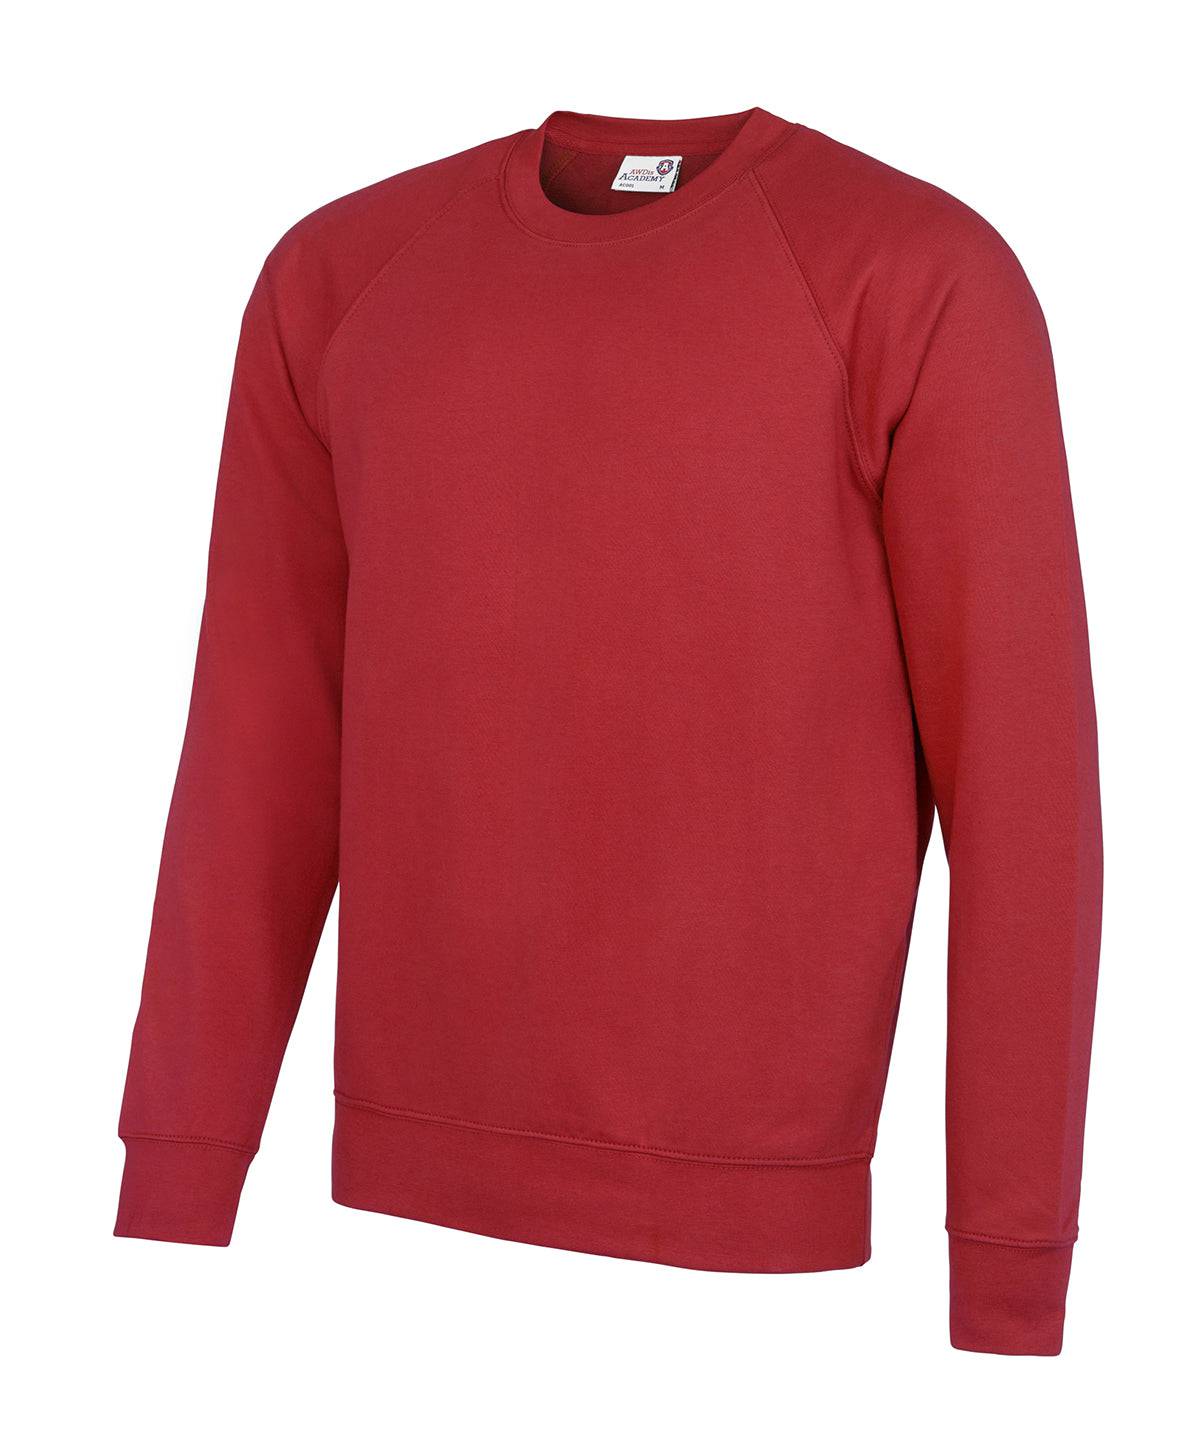 Academy Red - Senior Academy raglan sweatshirt